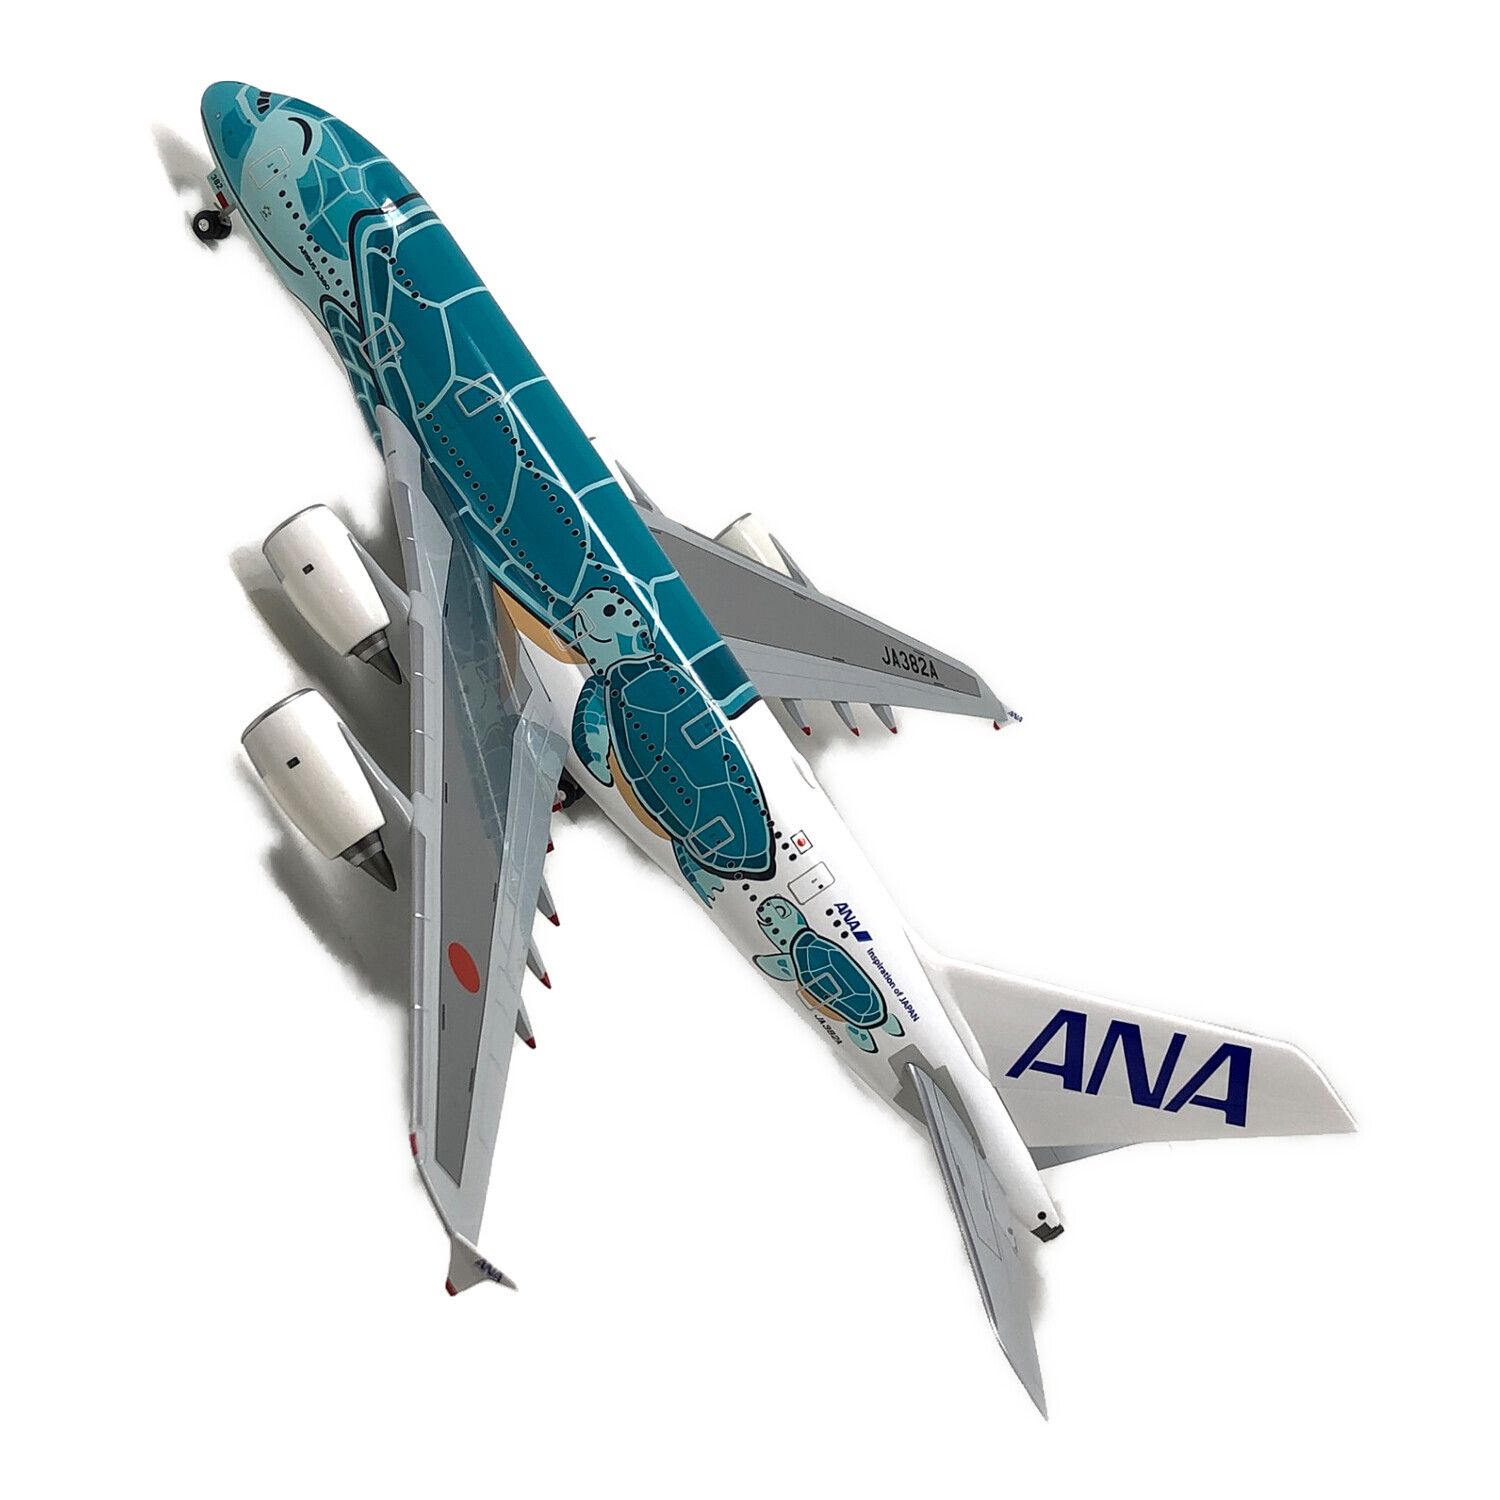 ANA(アナ) AIRBUS A380 FLYING HONU(フライングホヌ) 飛行機模型 